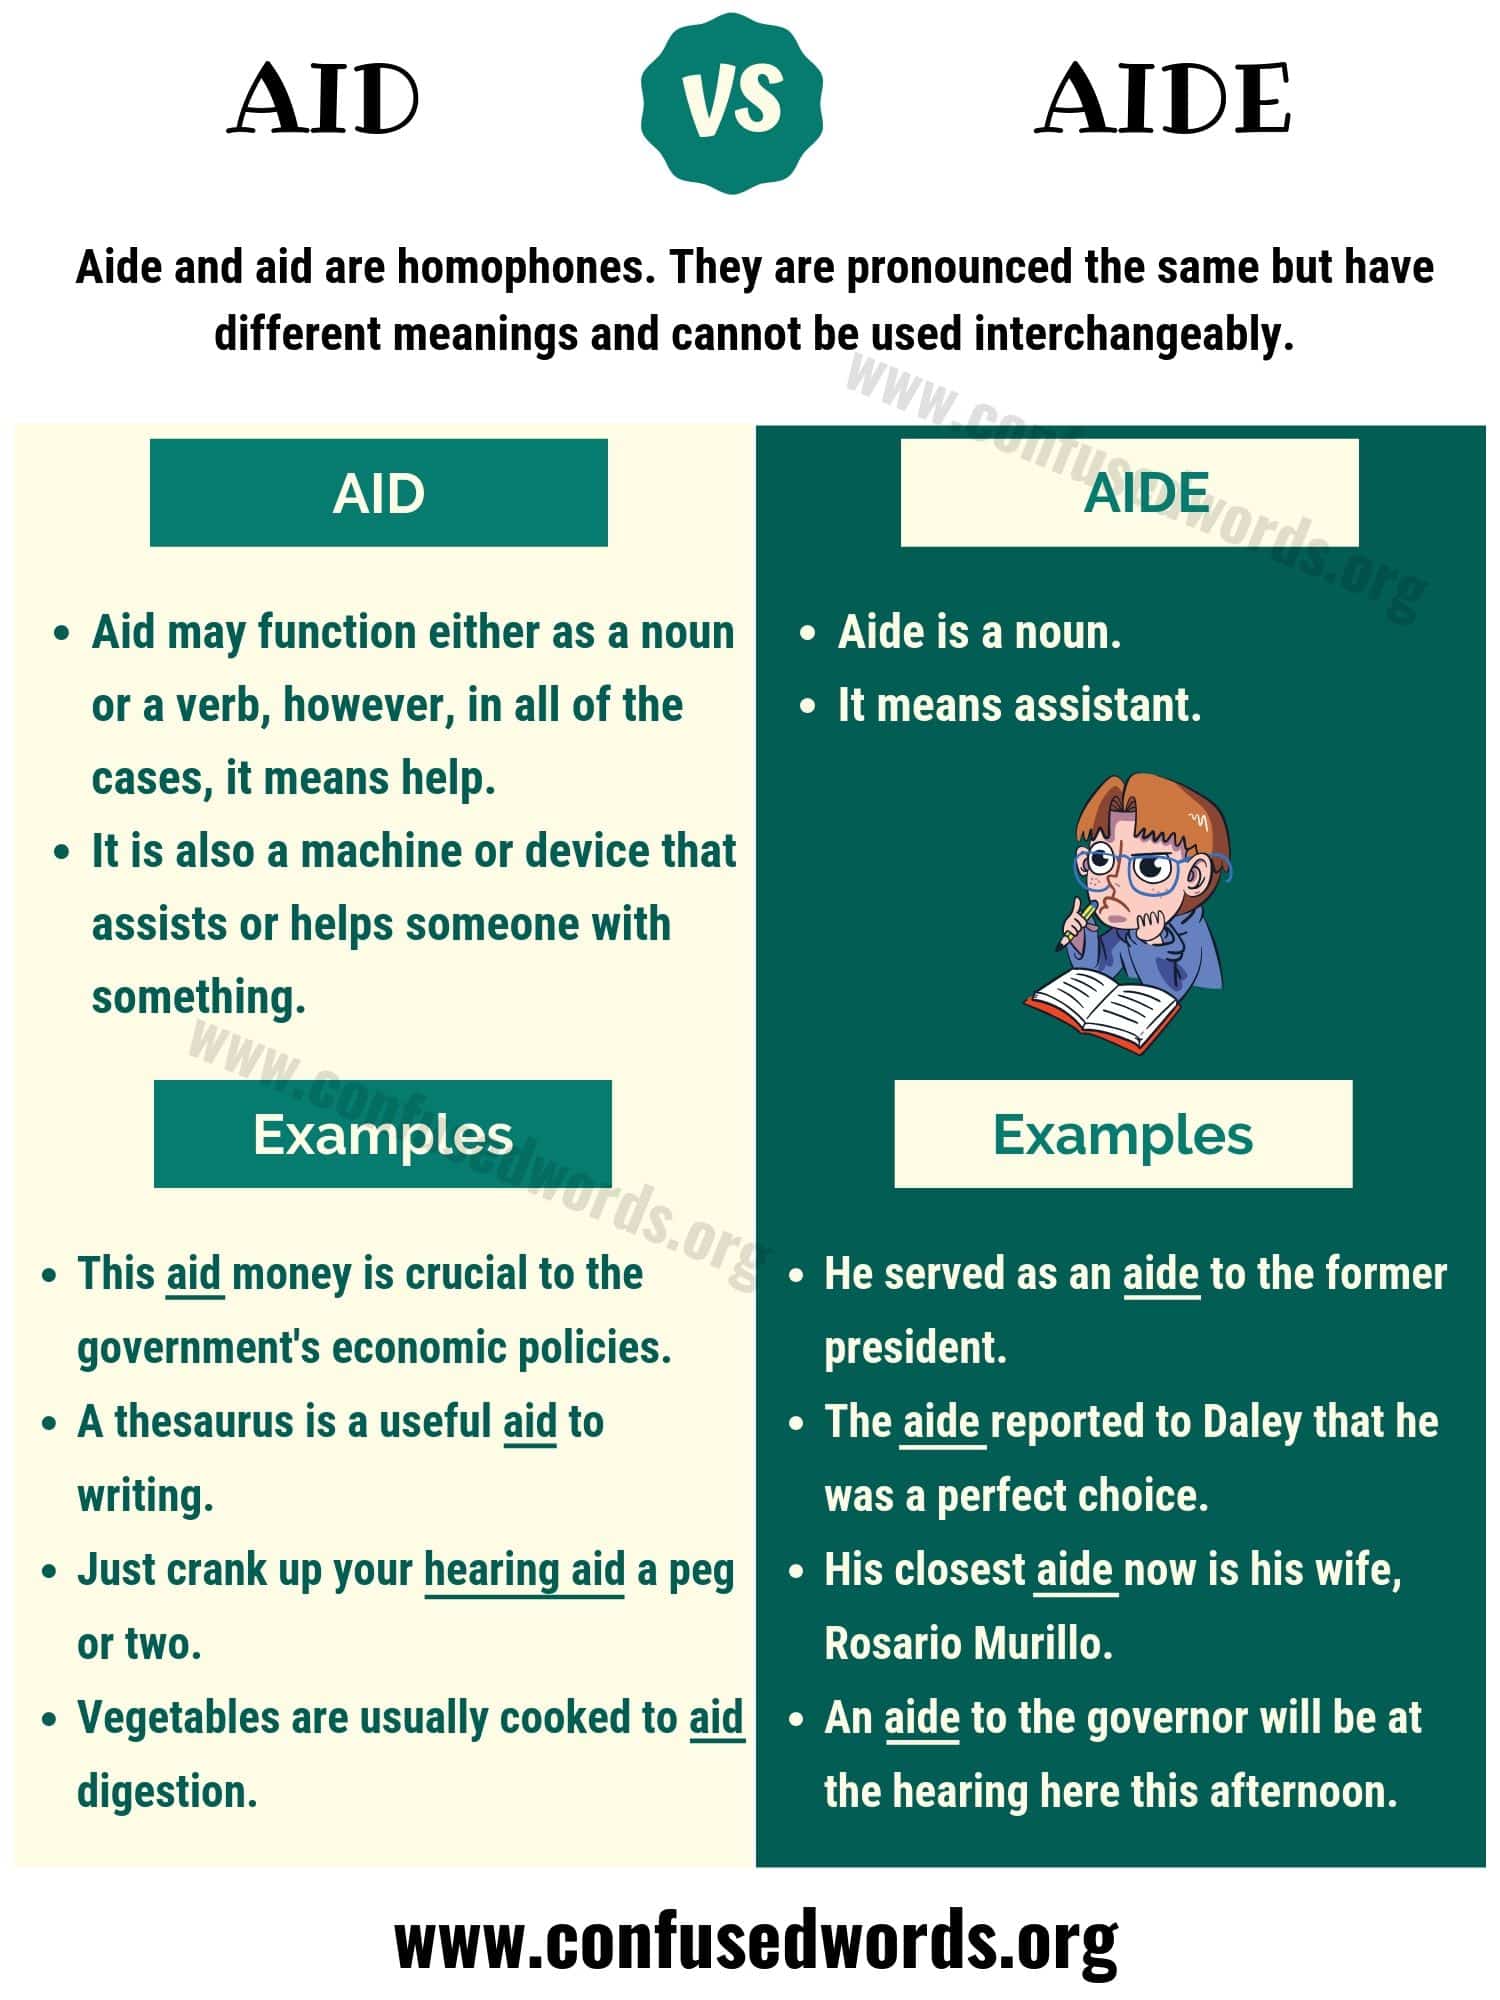 Aid vs Aide